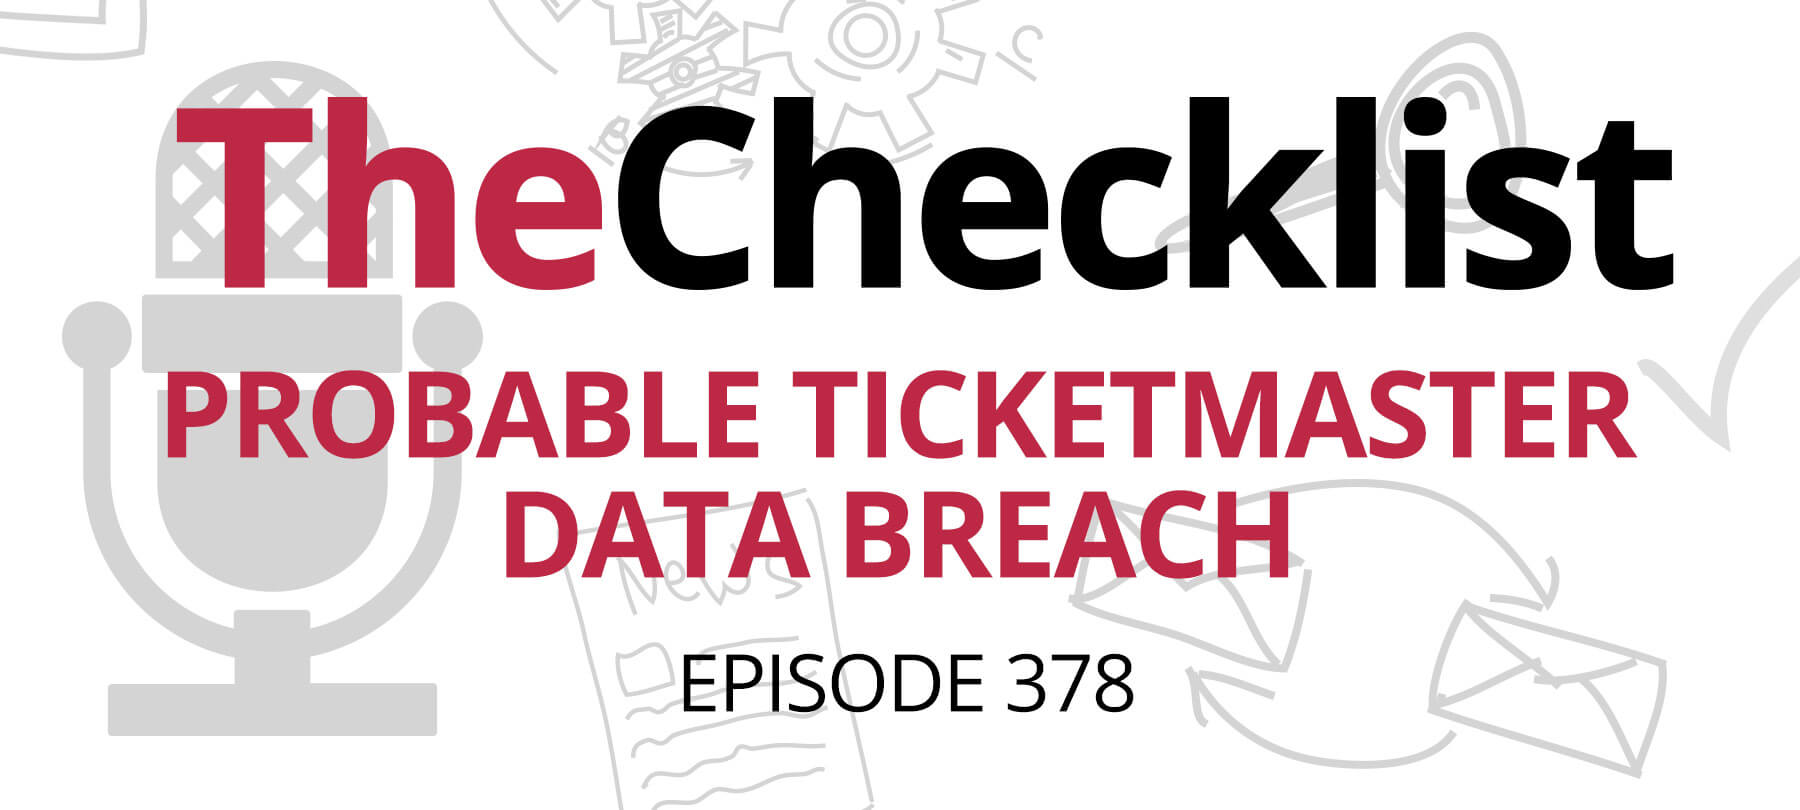 Checklist 378: Probable Ticketmaster Data Breach